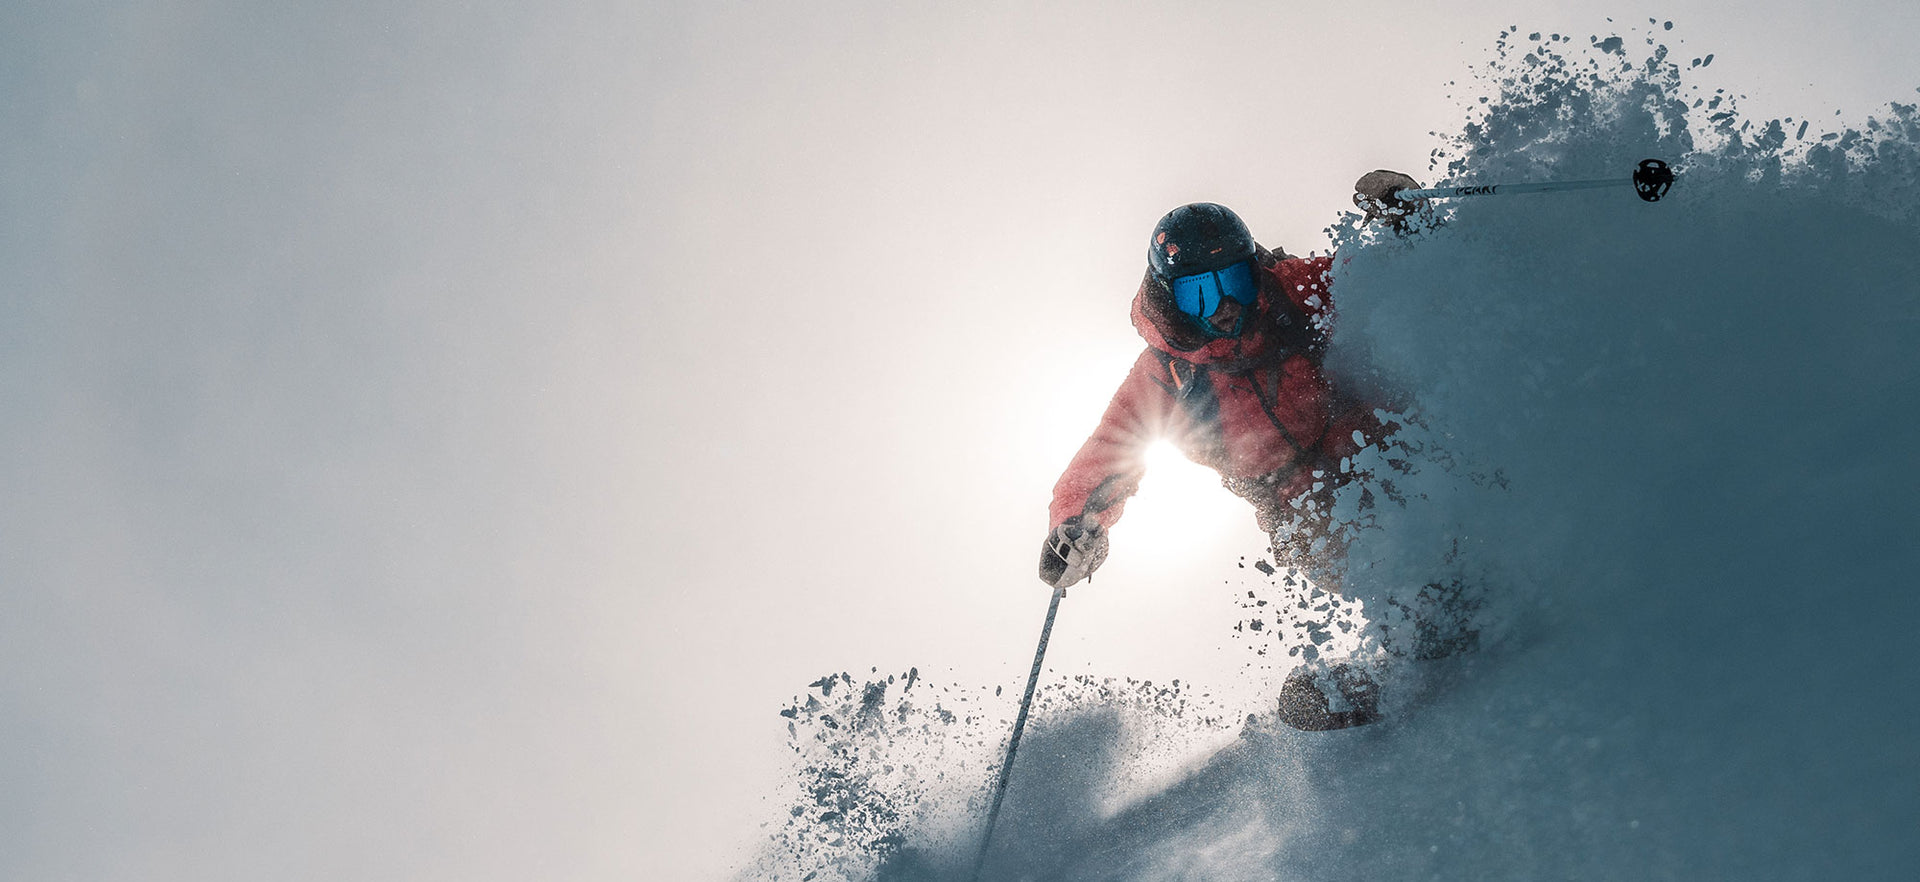 Demo Peak Skis – Peak Ski Company